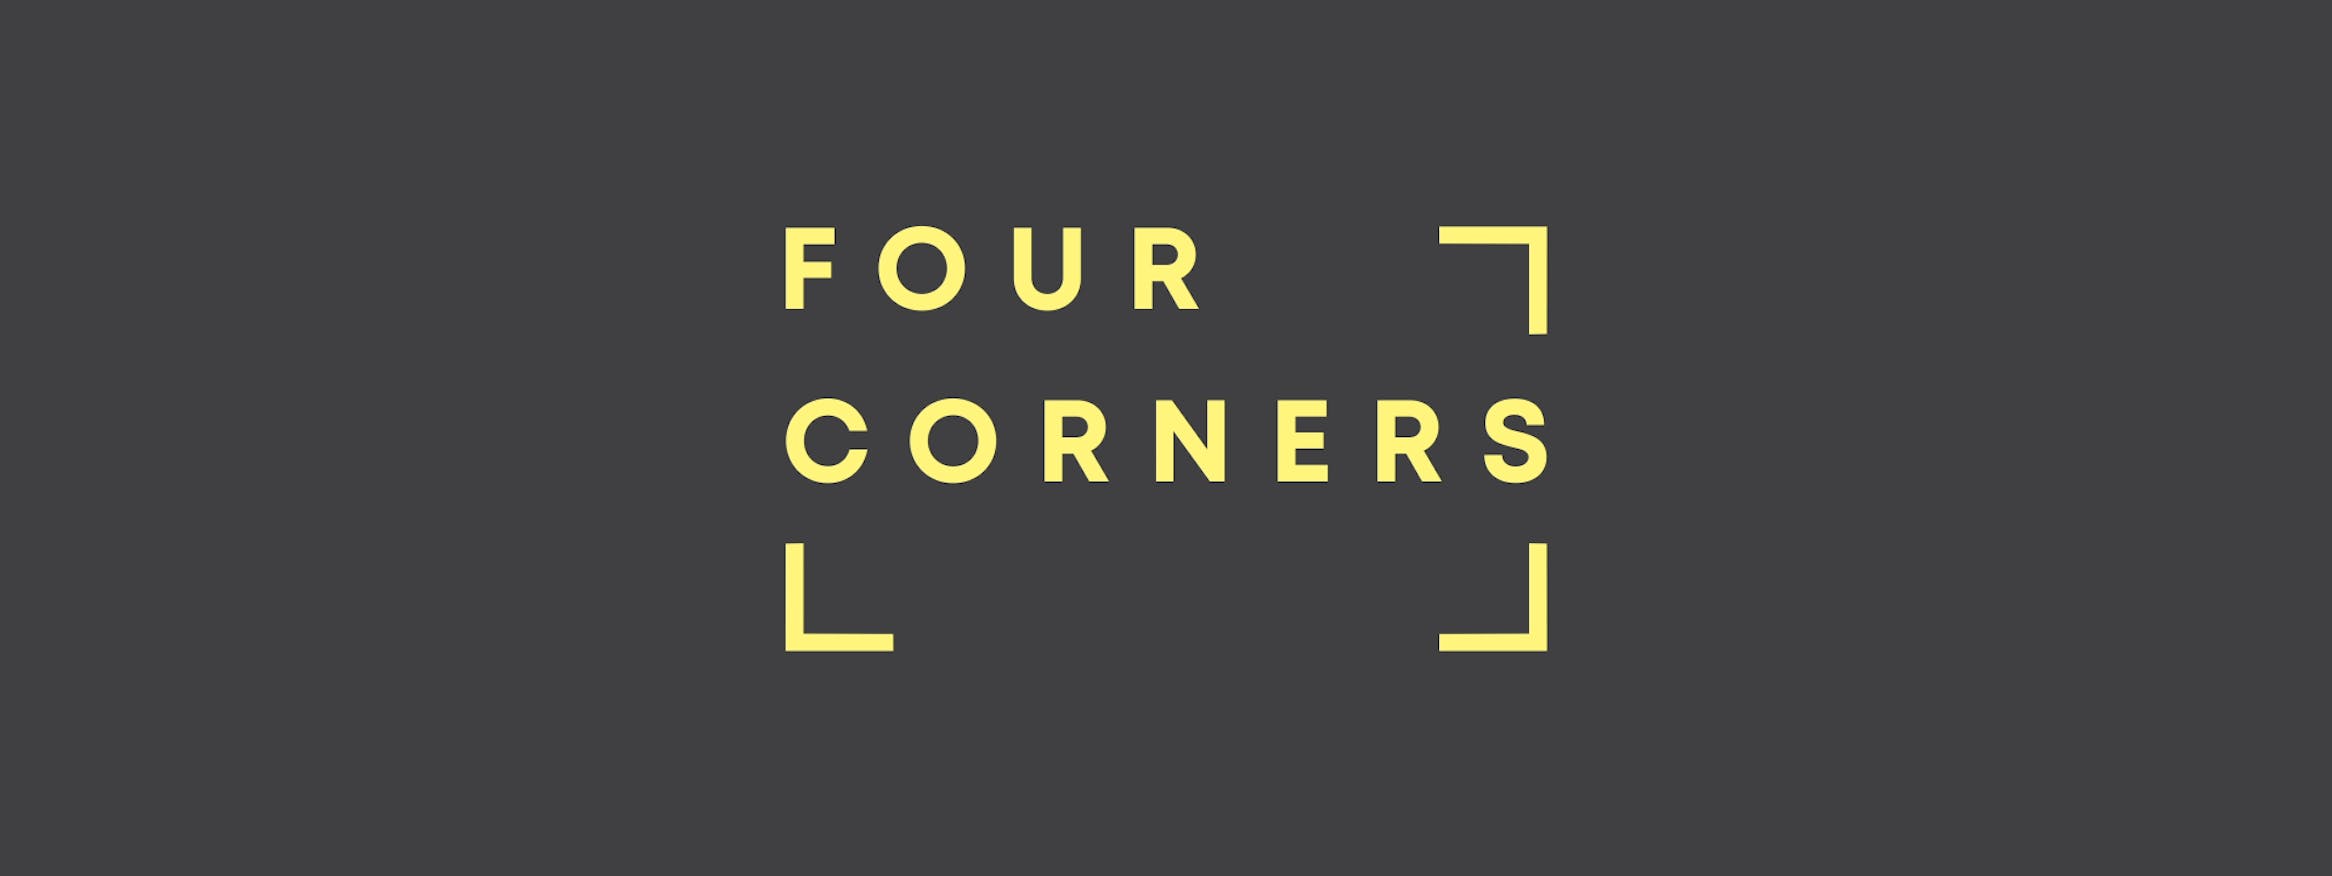 Four Corners - Animated Brand Video